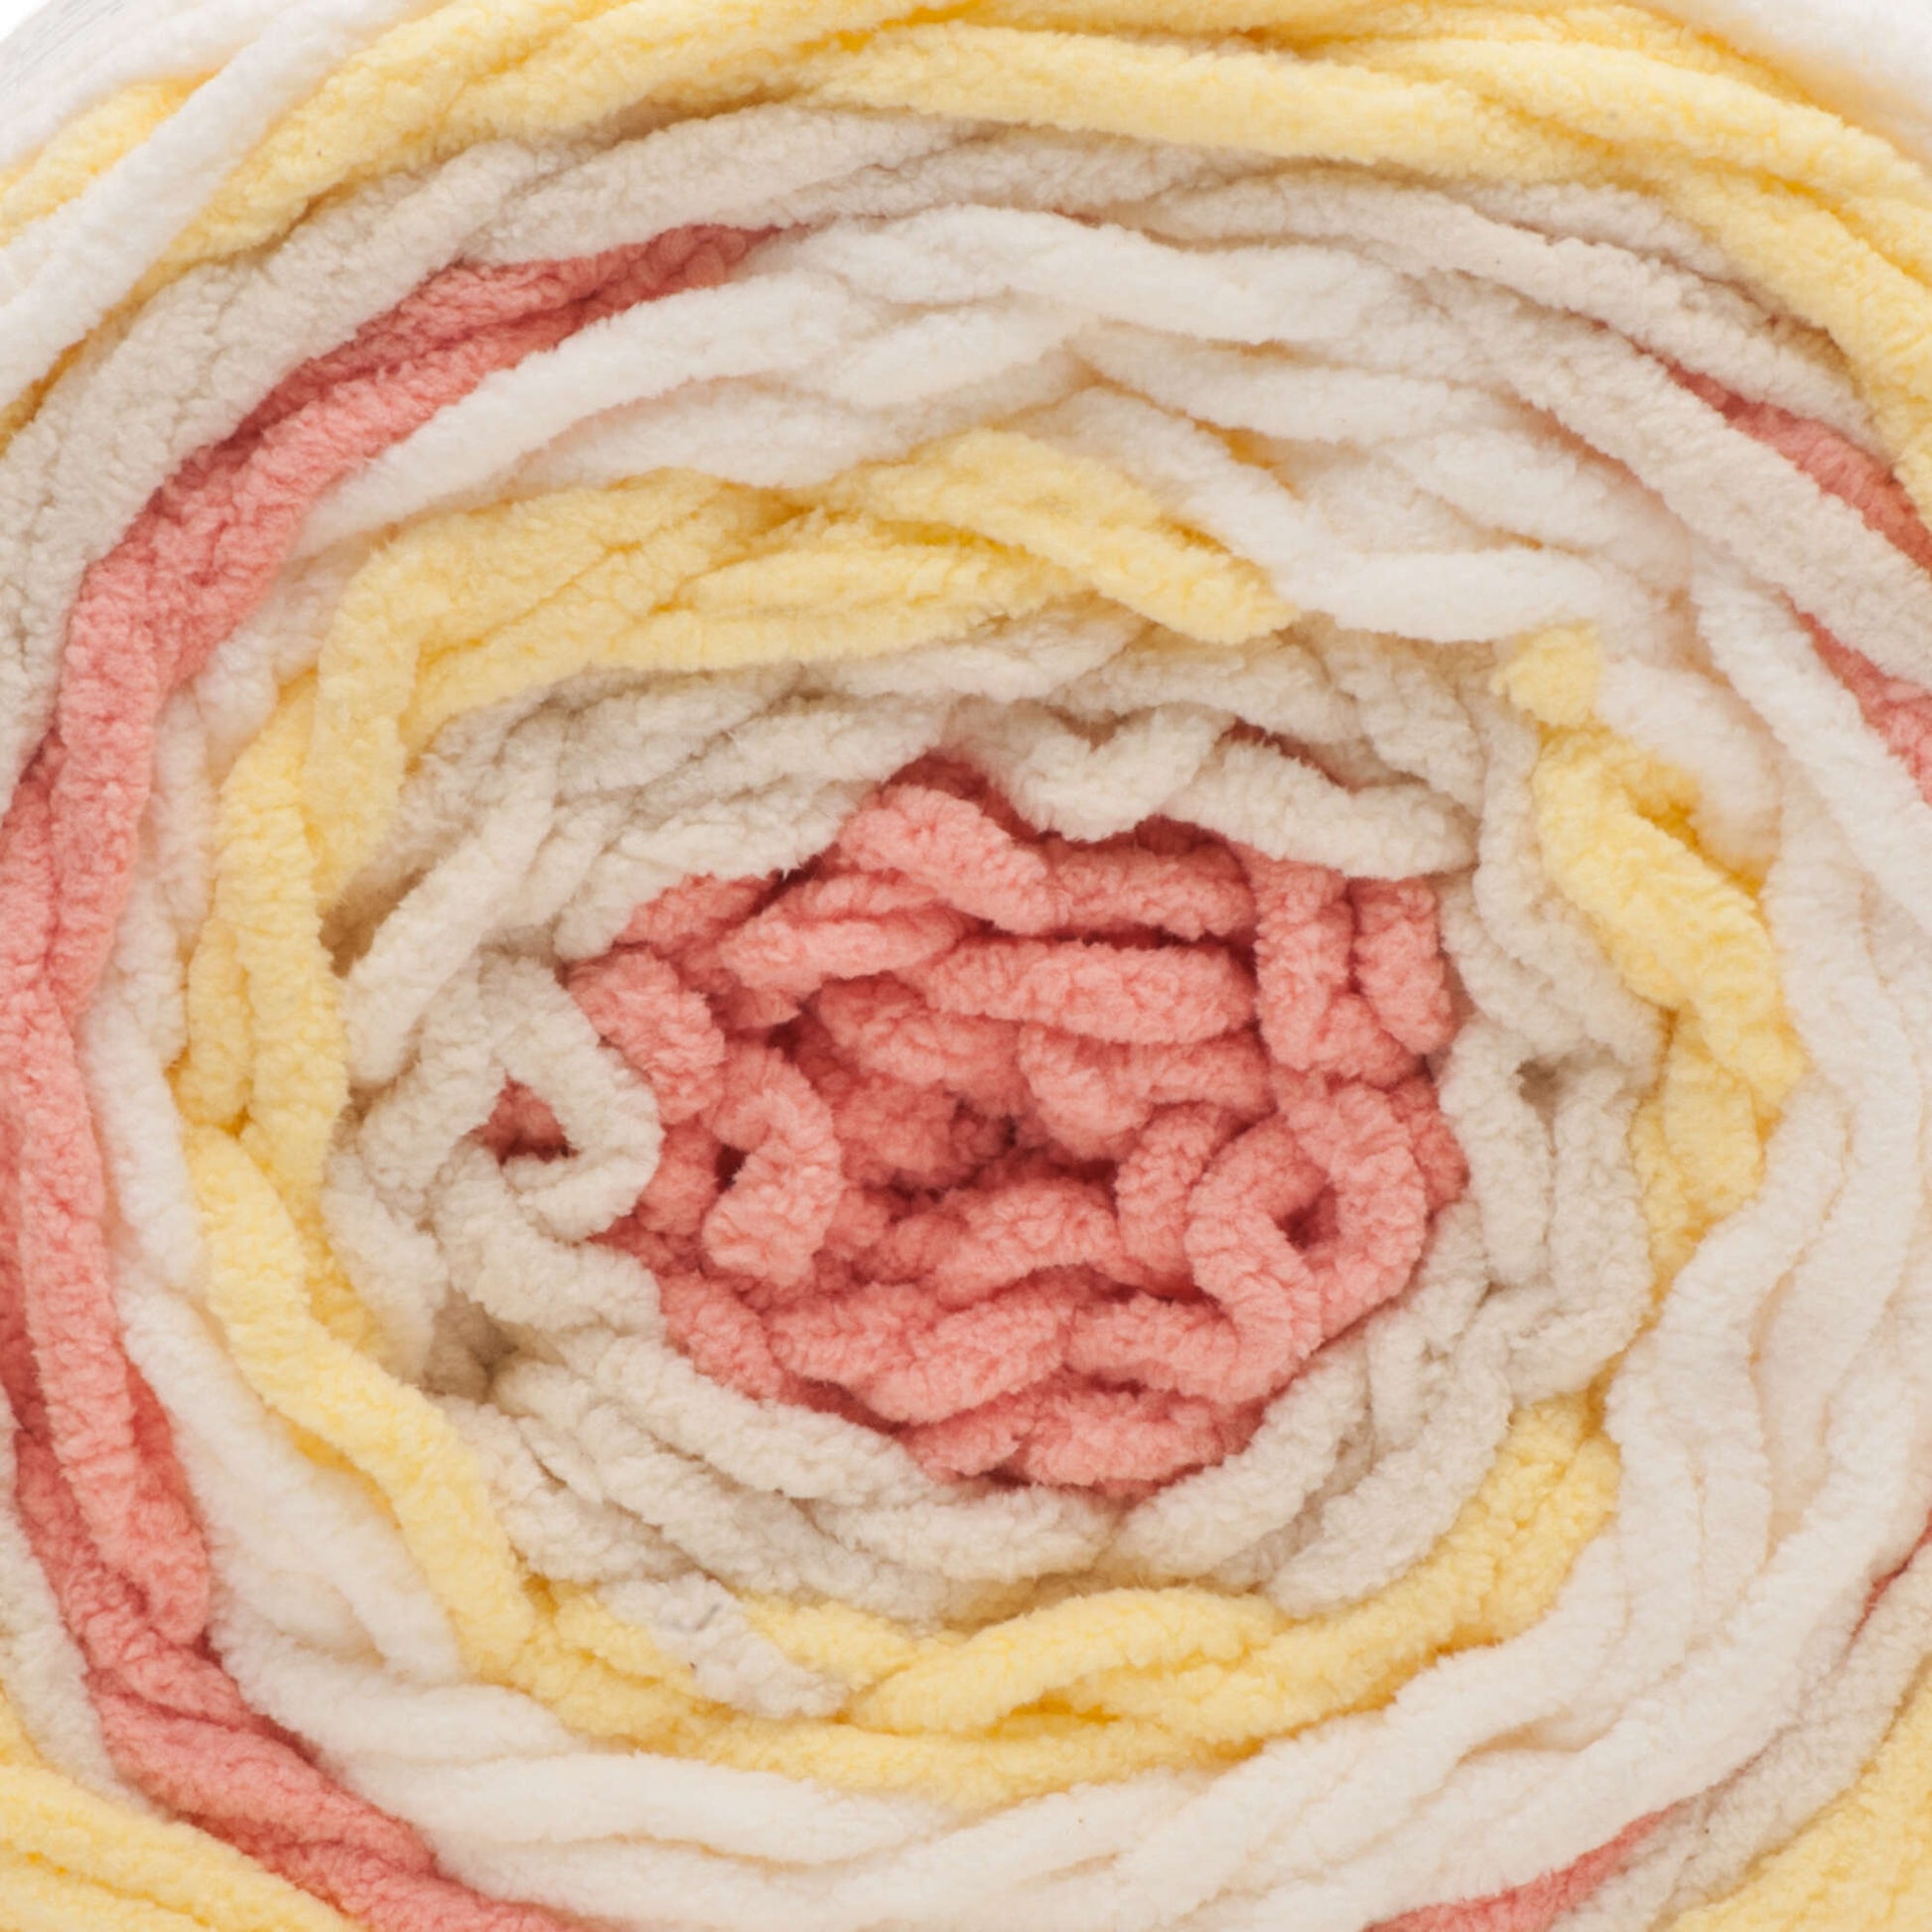 Bernat Blanket Stripes Yarn (300g/10.5oz) - Discontinued Shades Seashells